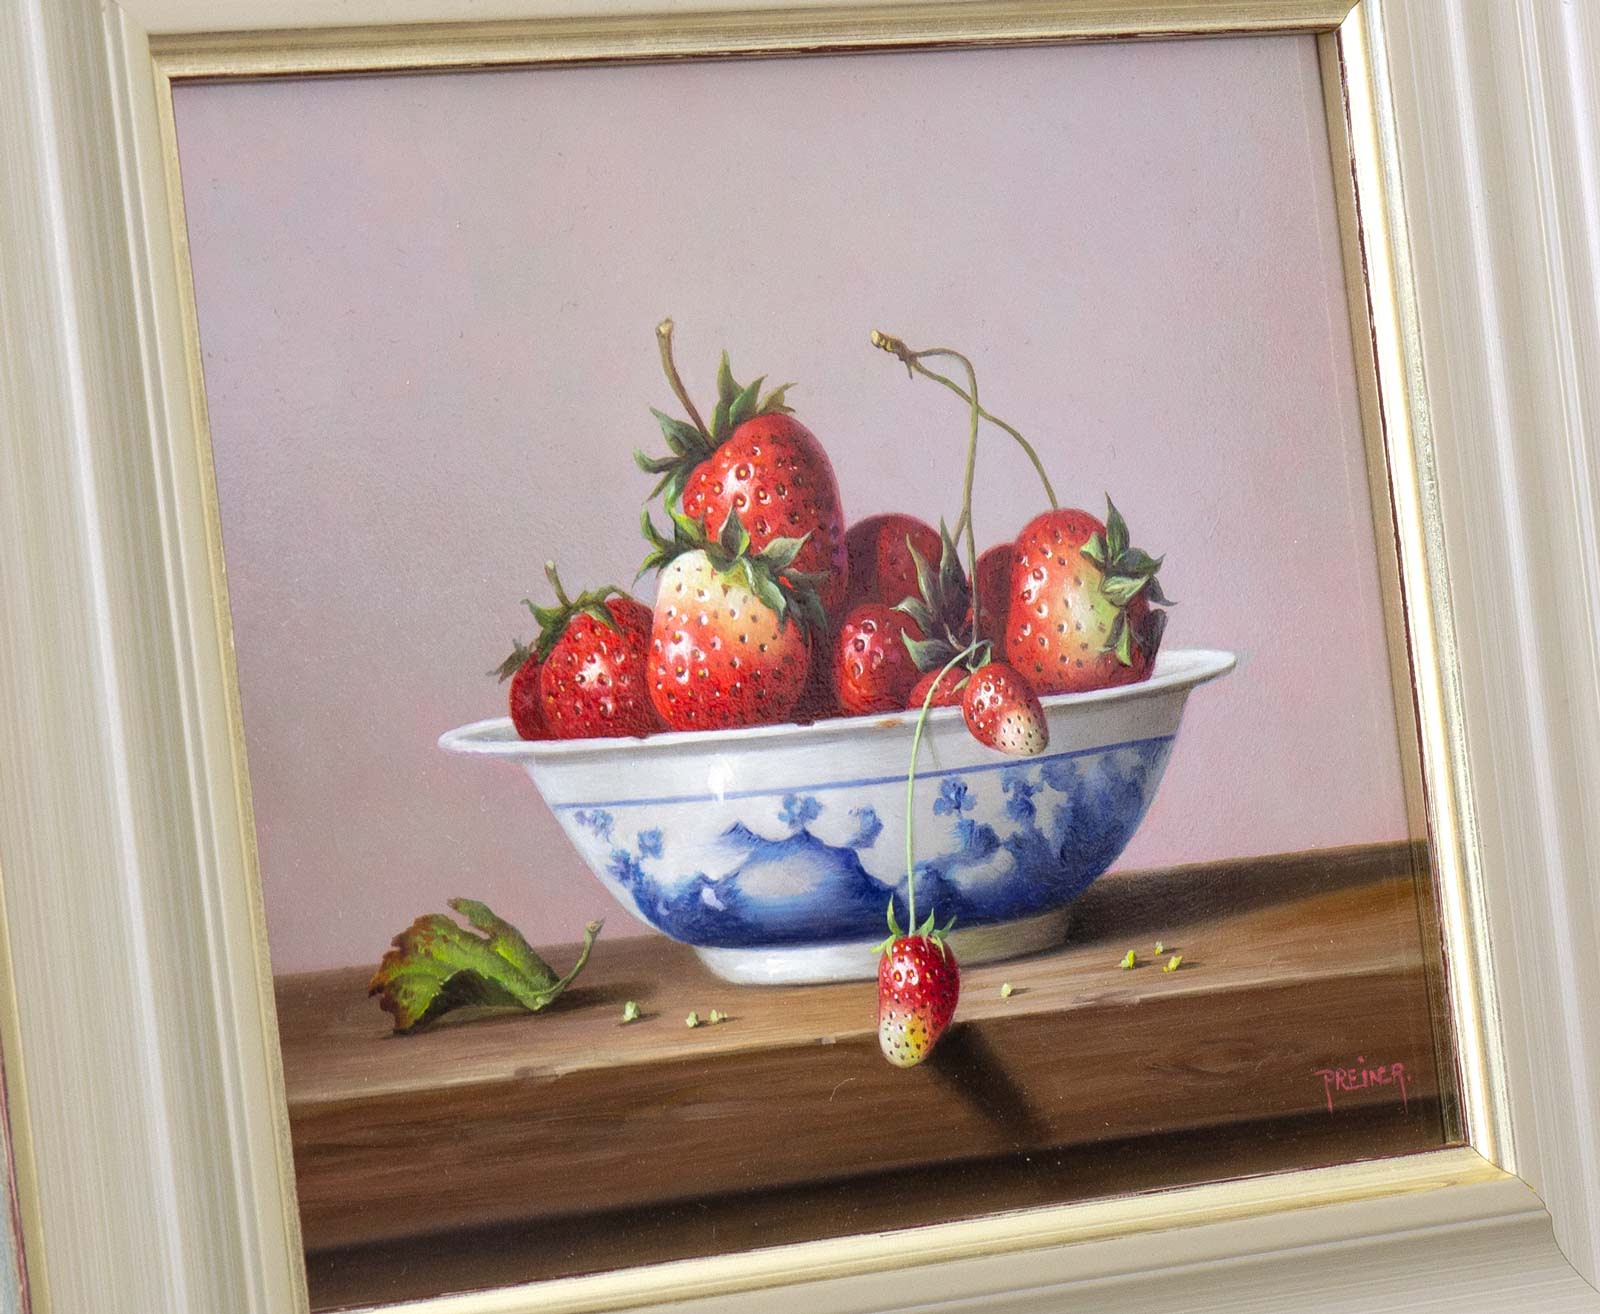 Strawberries in Porcelain Bowl